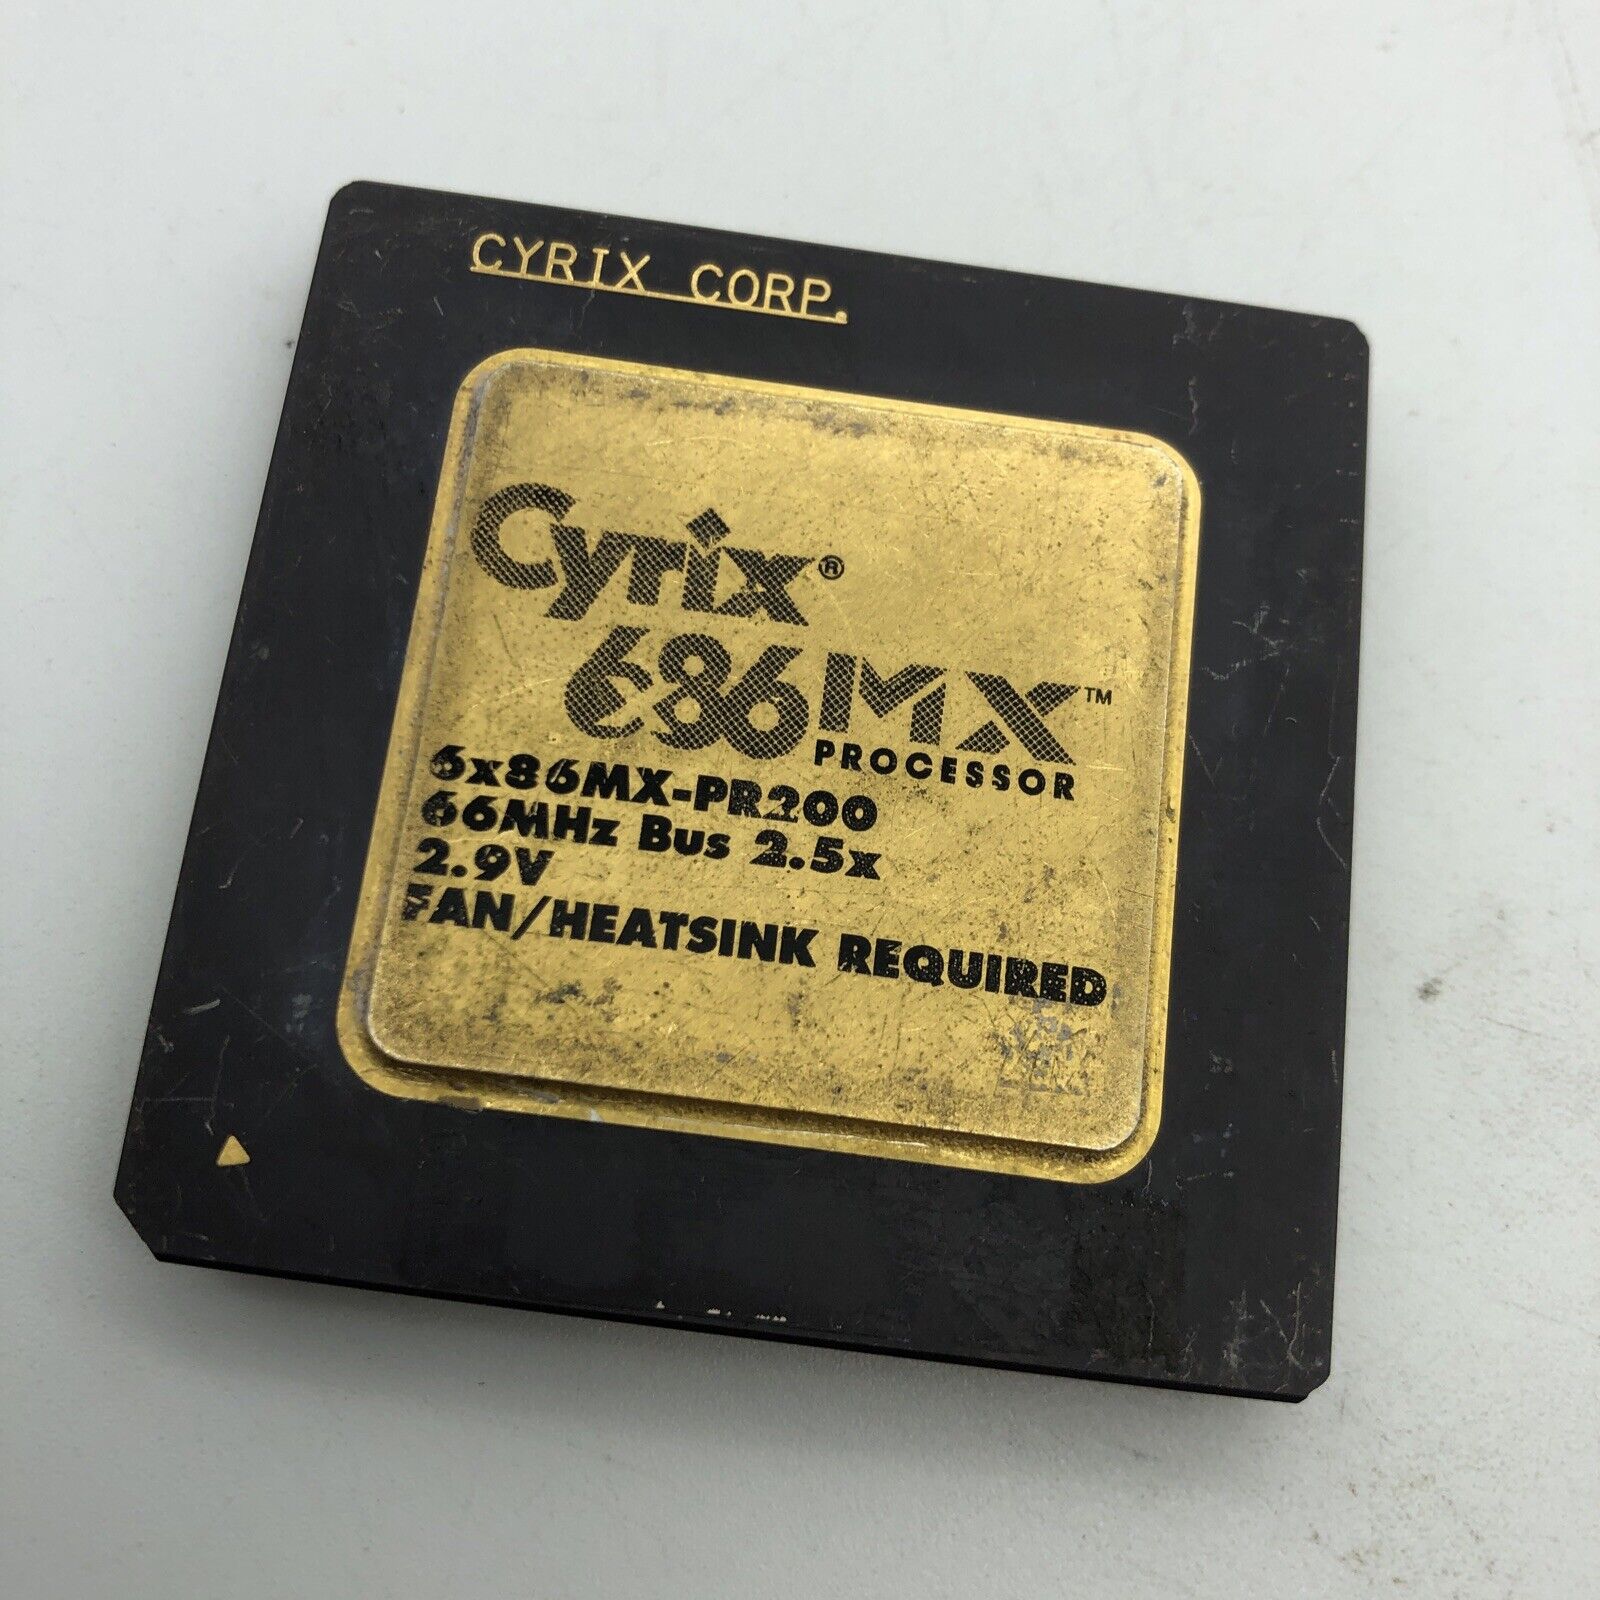 Cyrix 6x86MX PR200 2.5 x 66mhz 2.9v Vintage GOLD Processor *Curved Pins